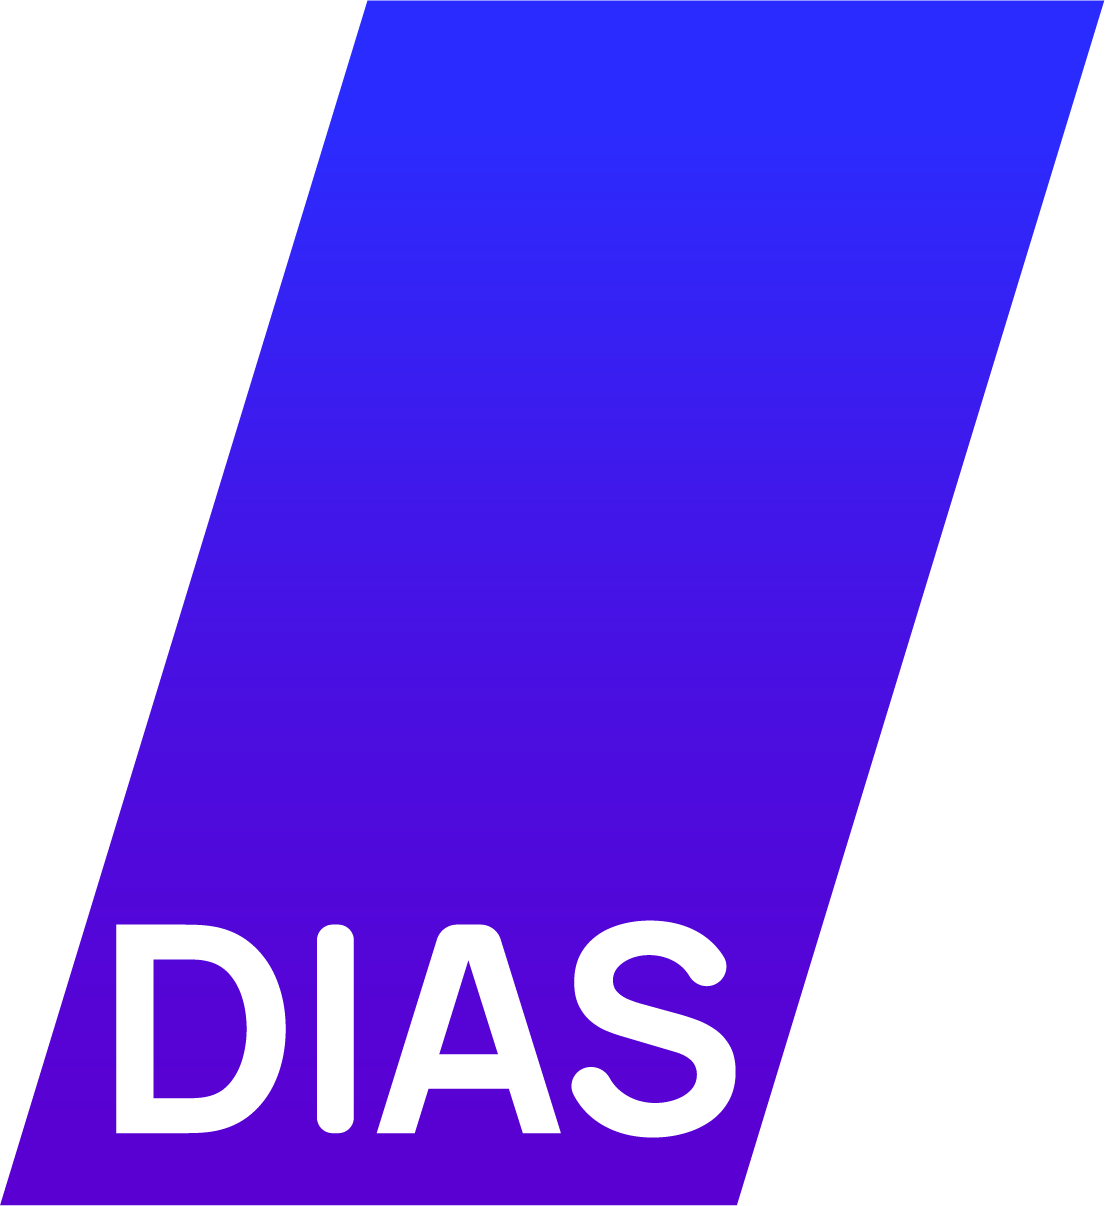 Team symbol of DIAS